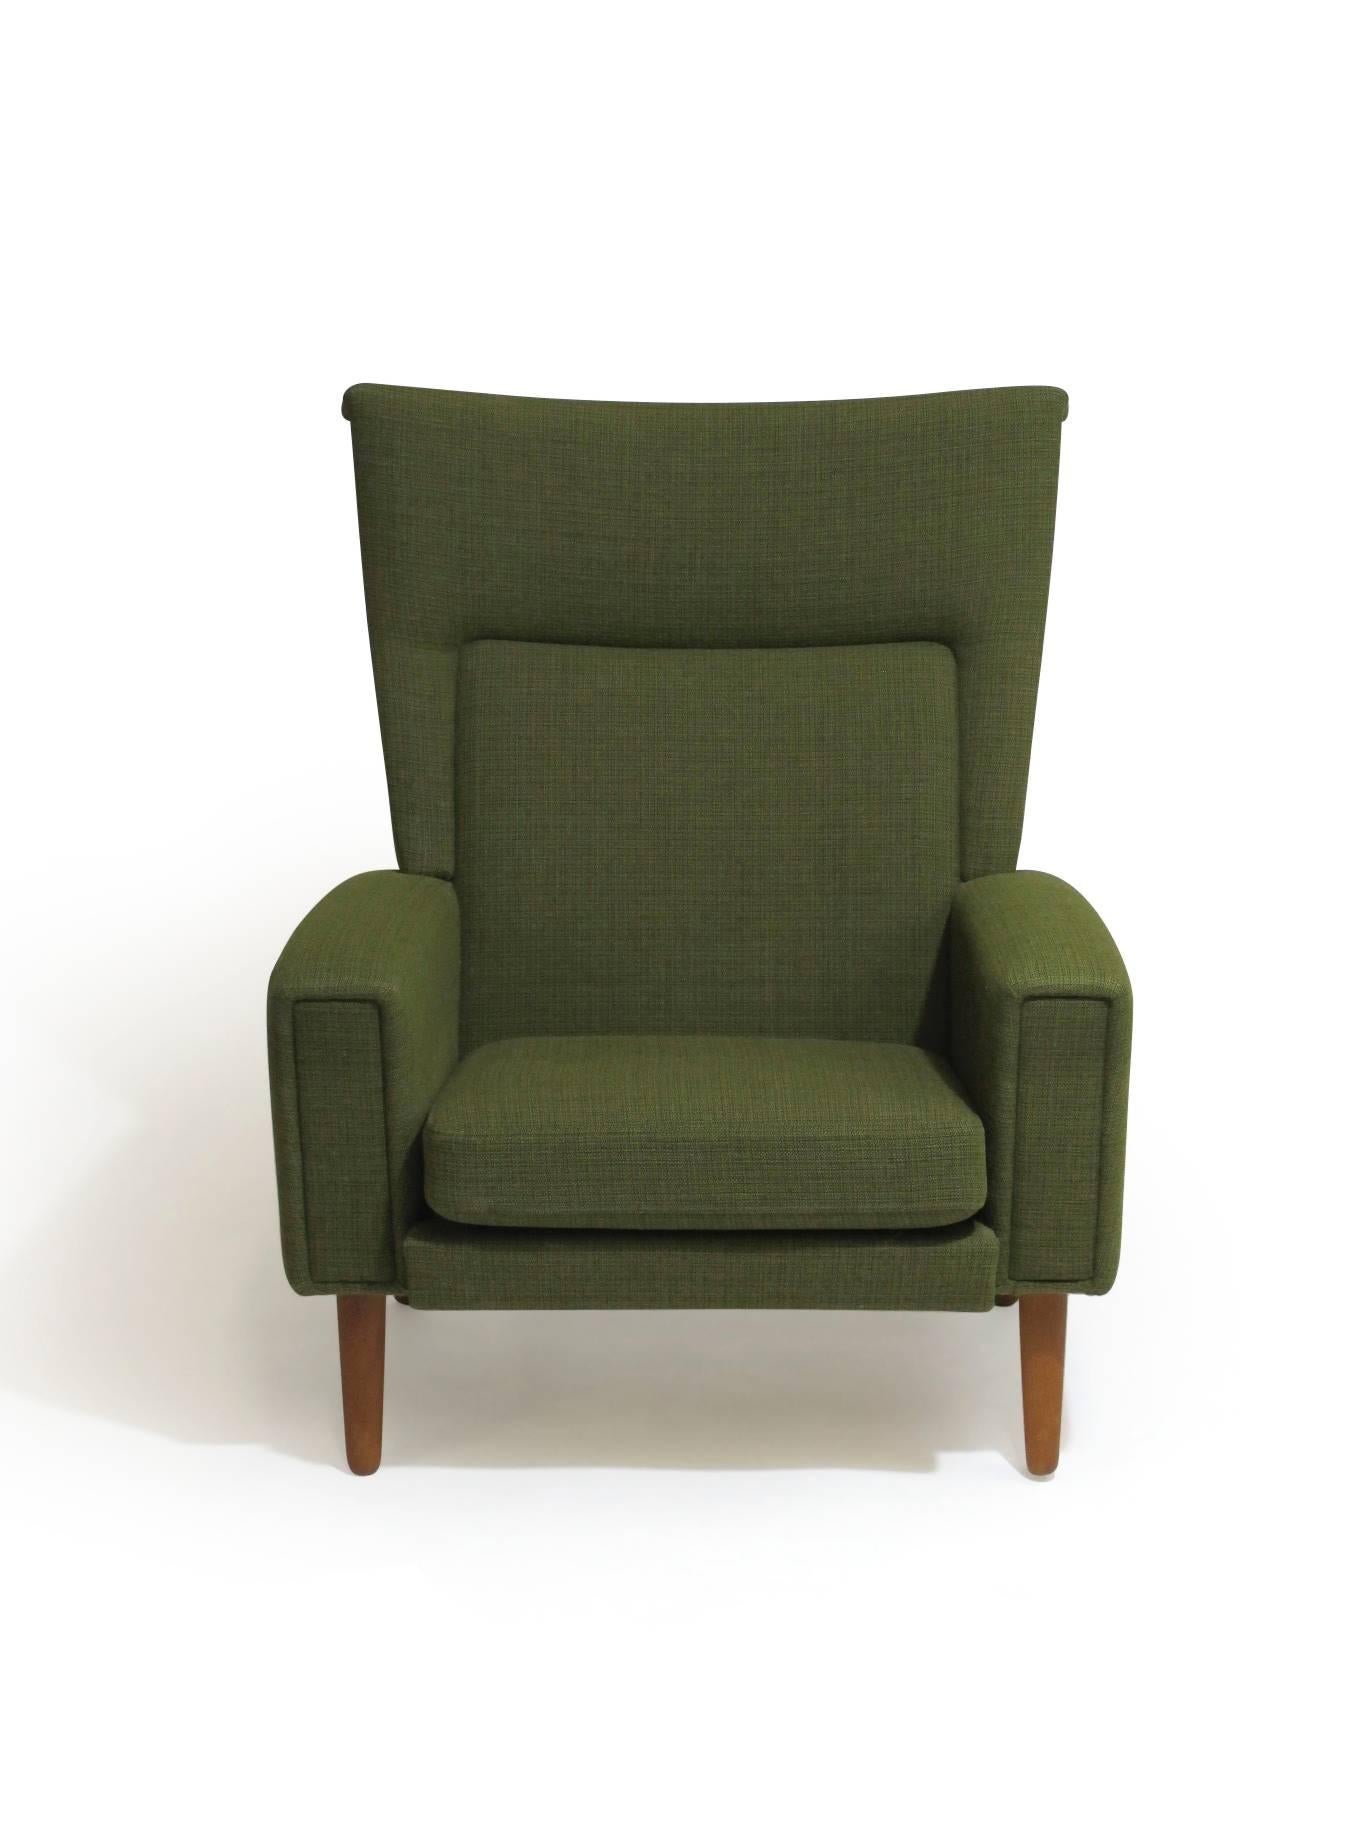 20th Century Danish Highback Lounge Chair in Green Fabric